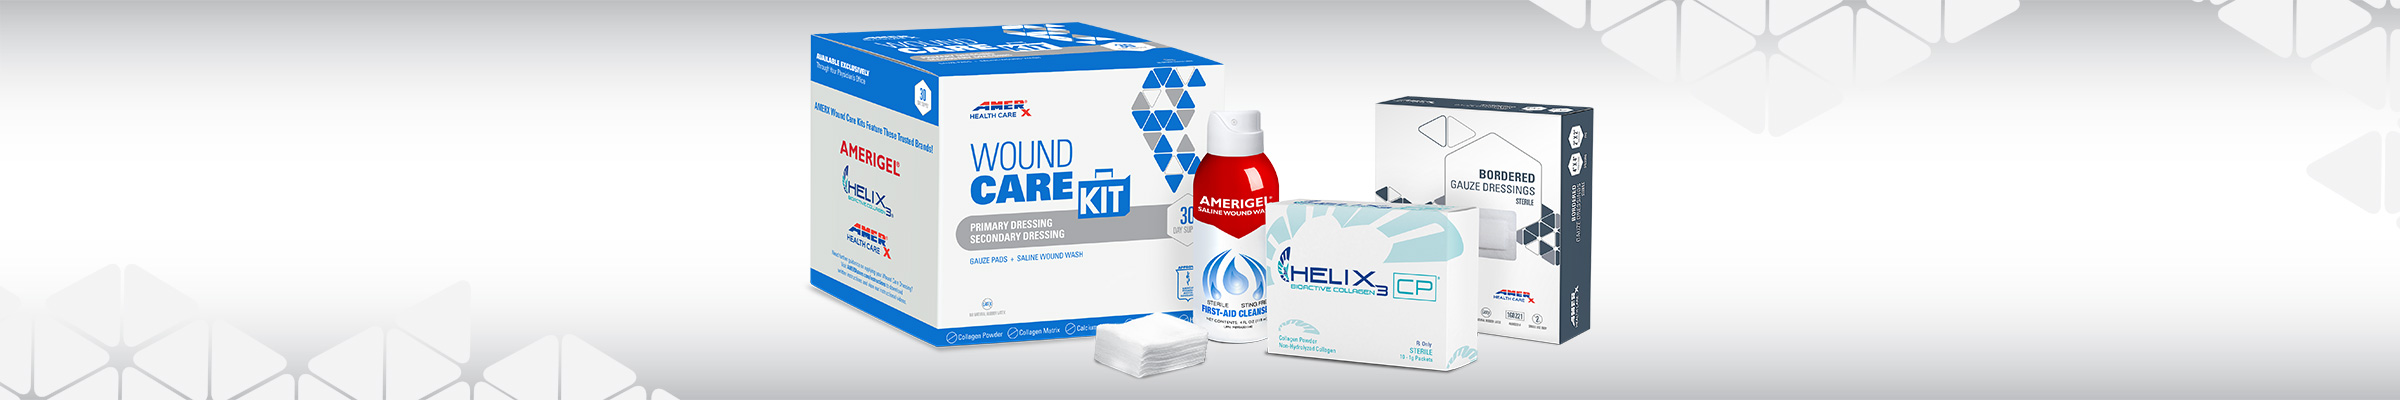 AMERX Wound Care Kit-CP Powder